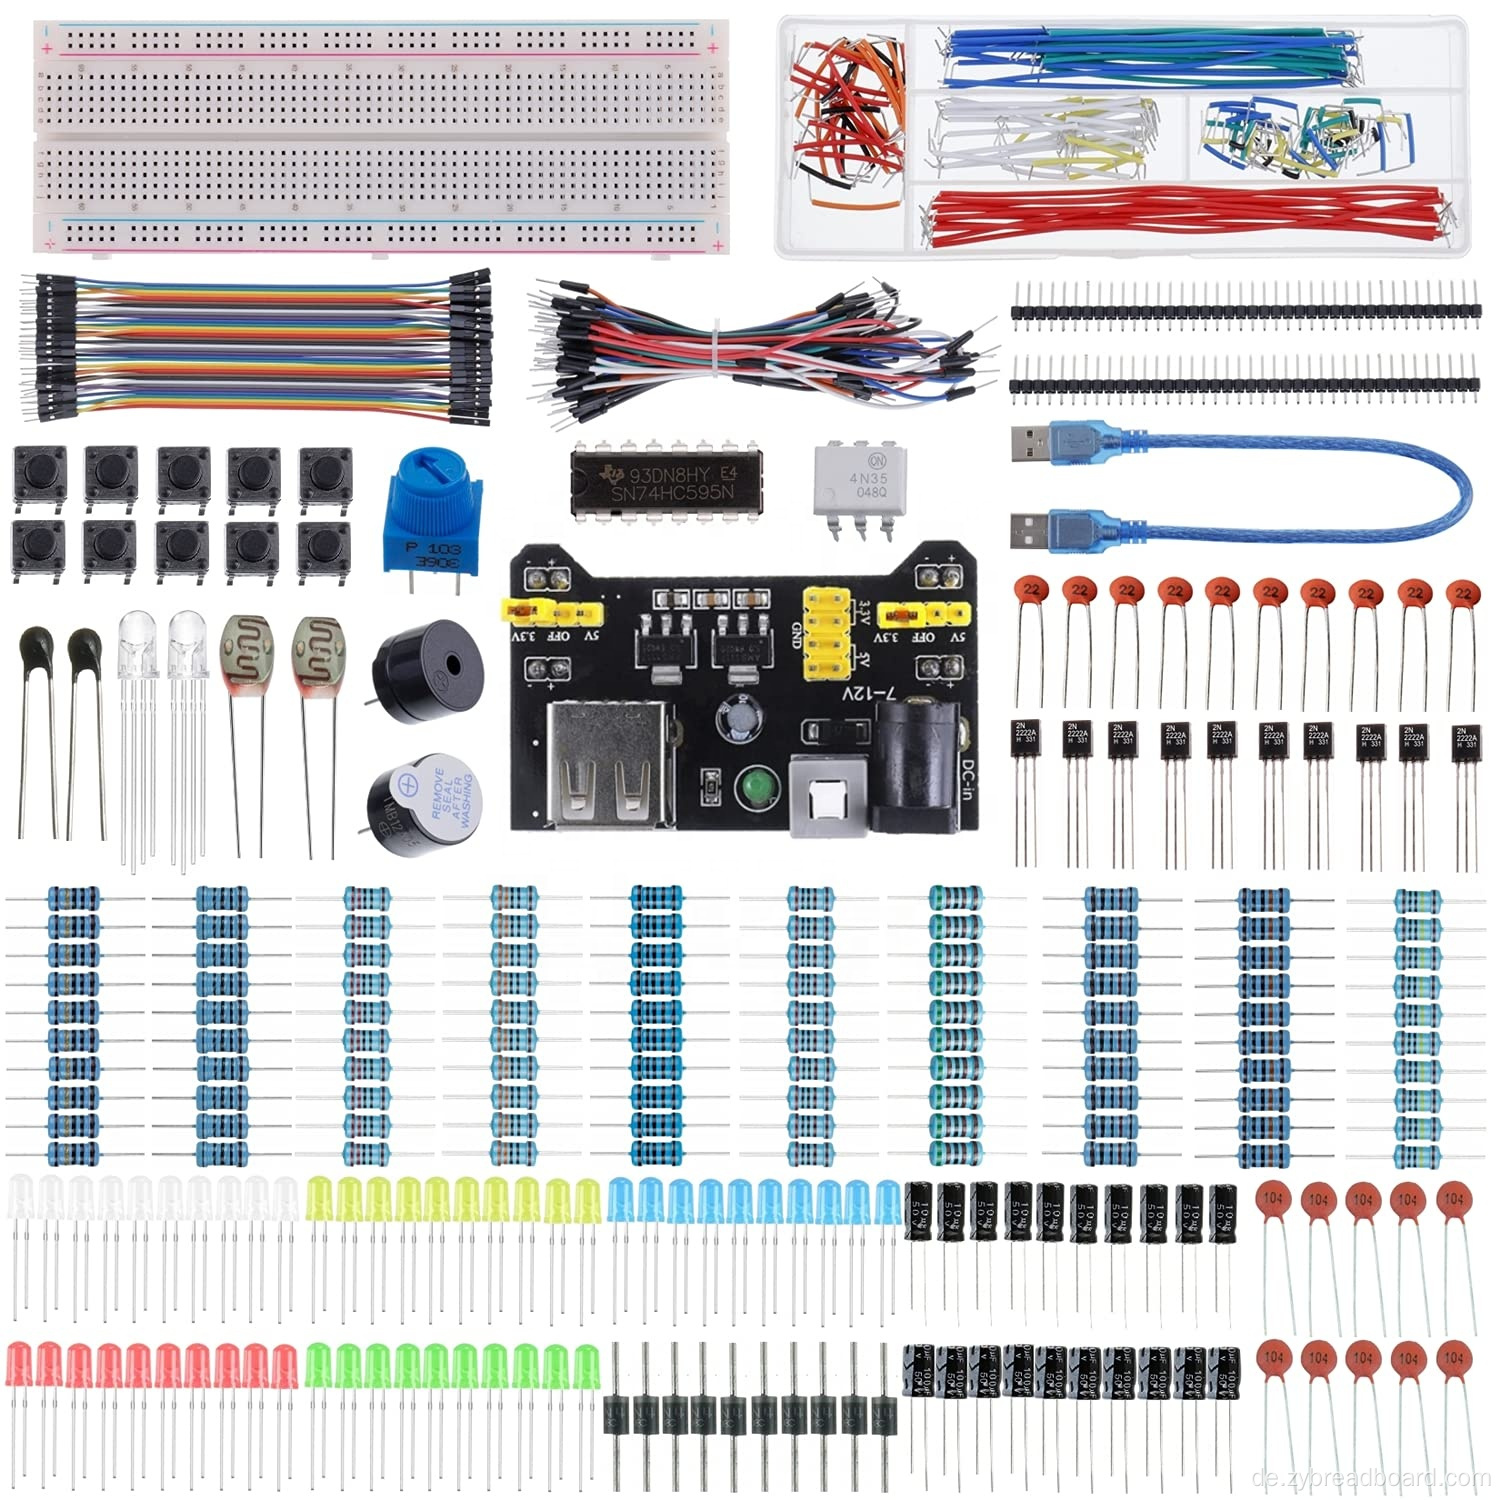 Elektronikkomponenten Fun Kit kompatibel mit Raspberry Pi